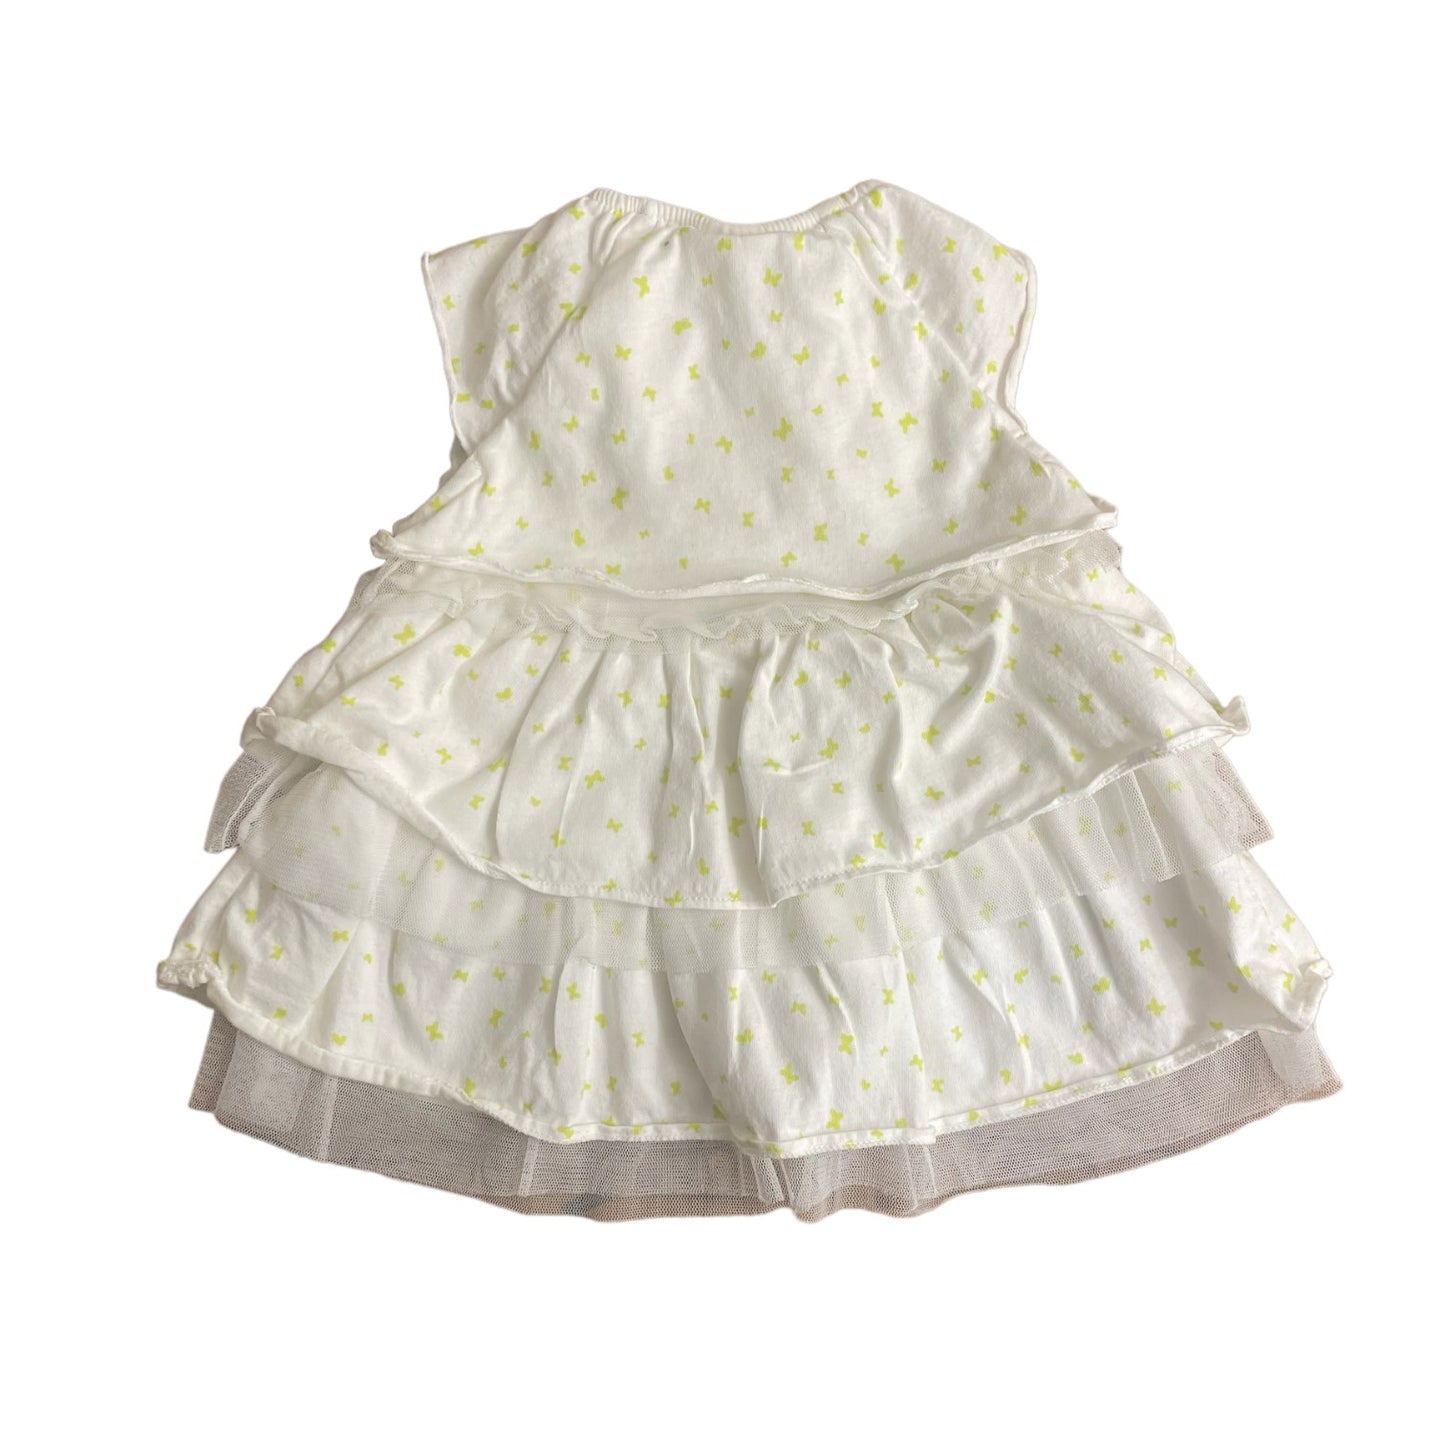 Carter's Girls Infant Dress Size 12 months